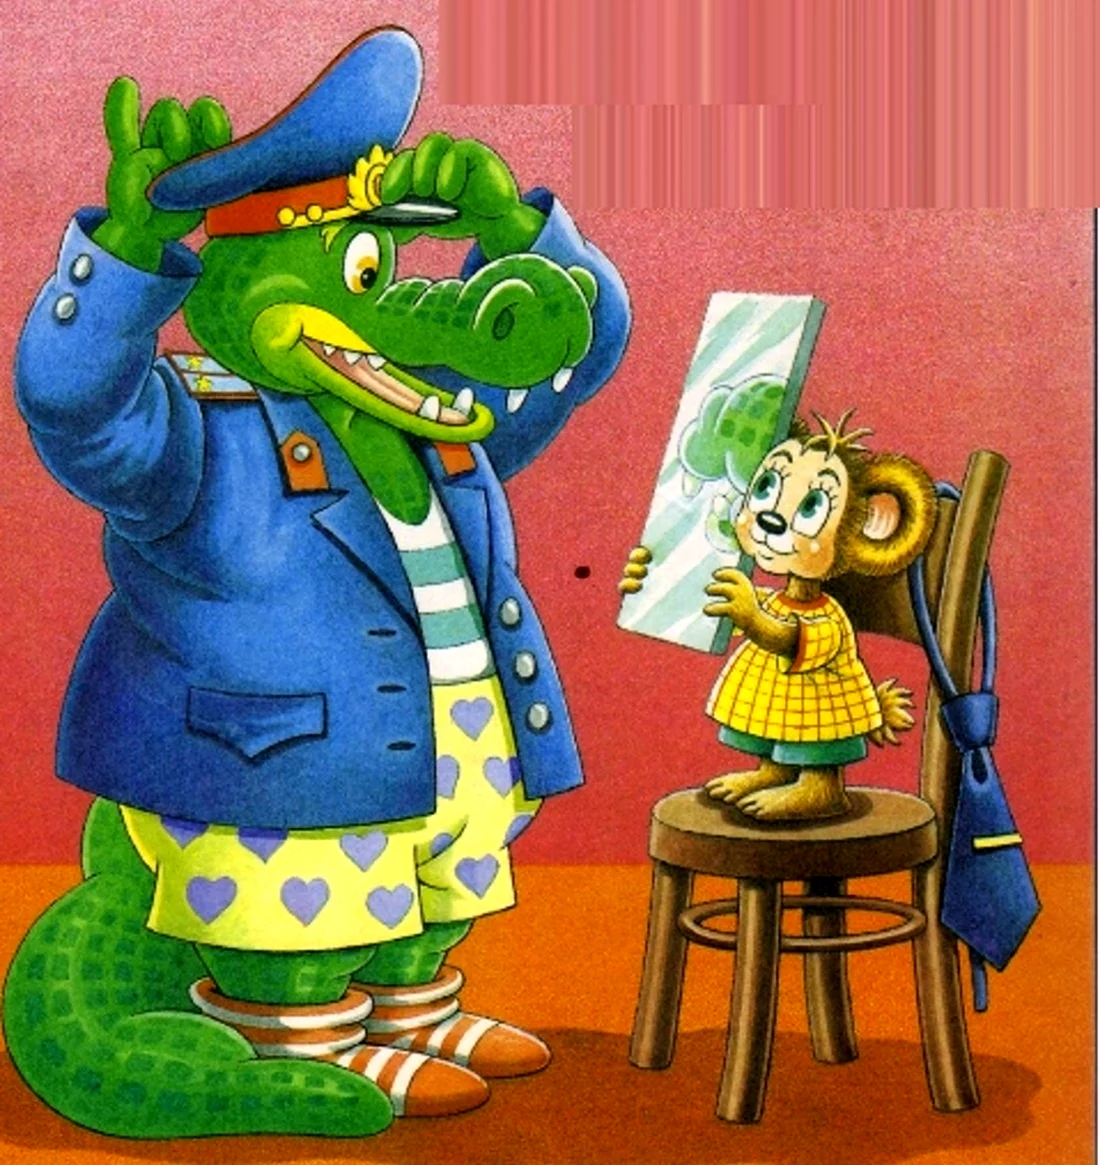 Успенский крокодил Гена. Картинка